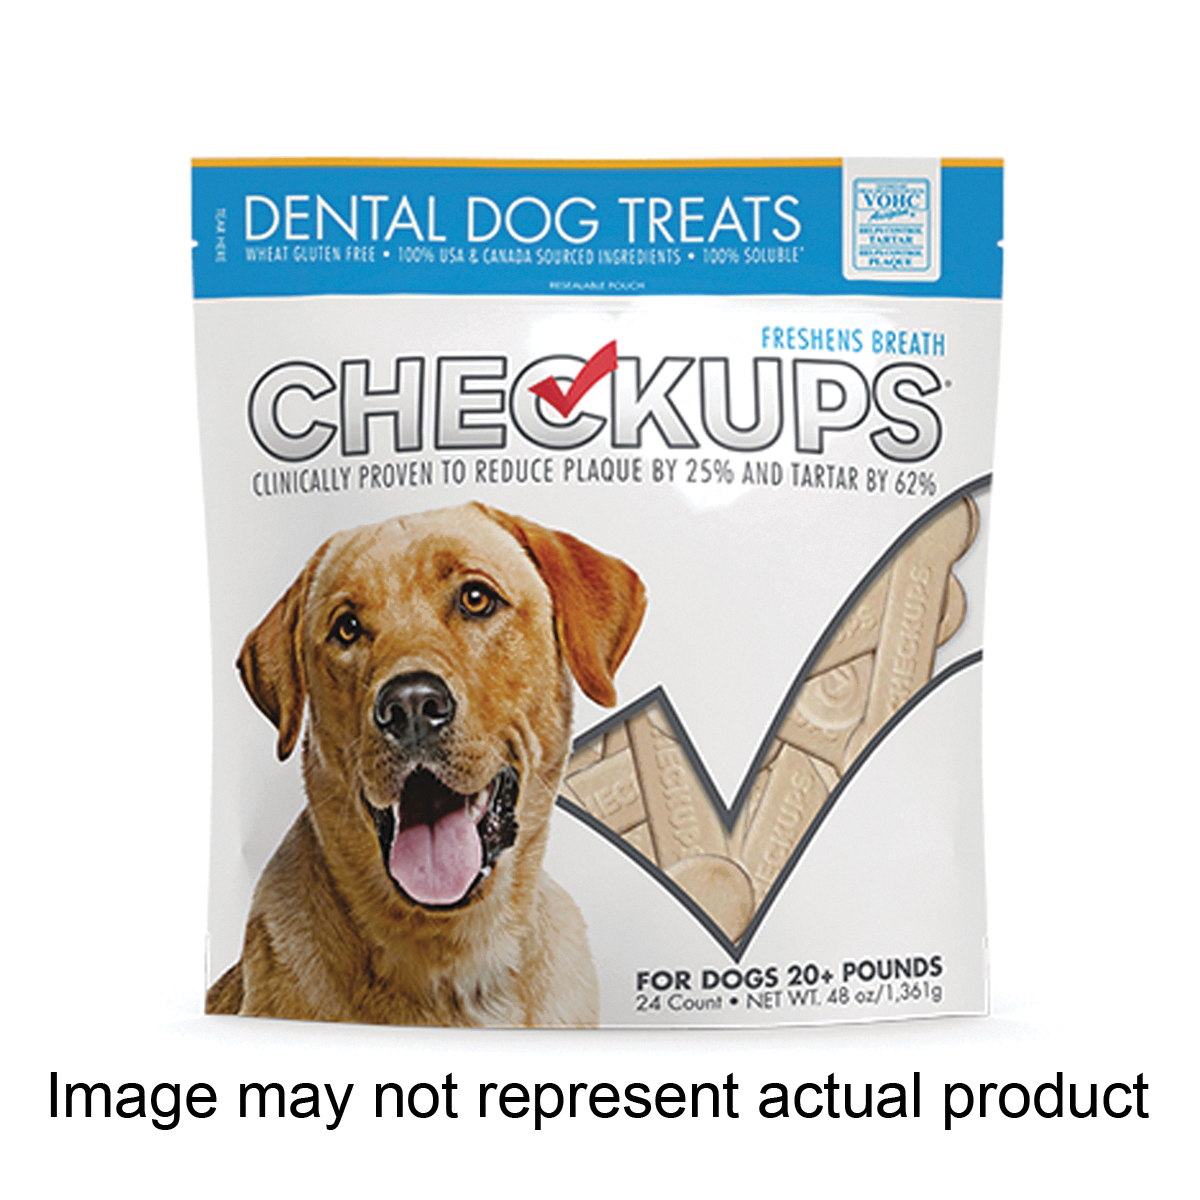 Checkups 8608782 Dental Treat, Special Diet: Gluten-Free, Natural, 3 lb, Bag - 1